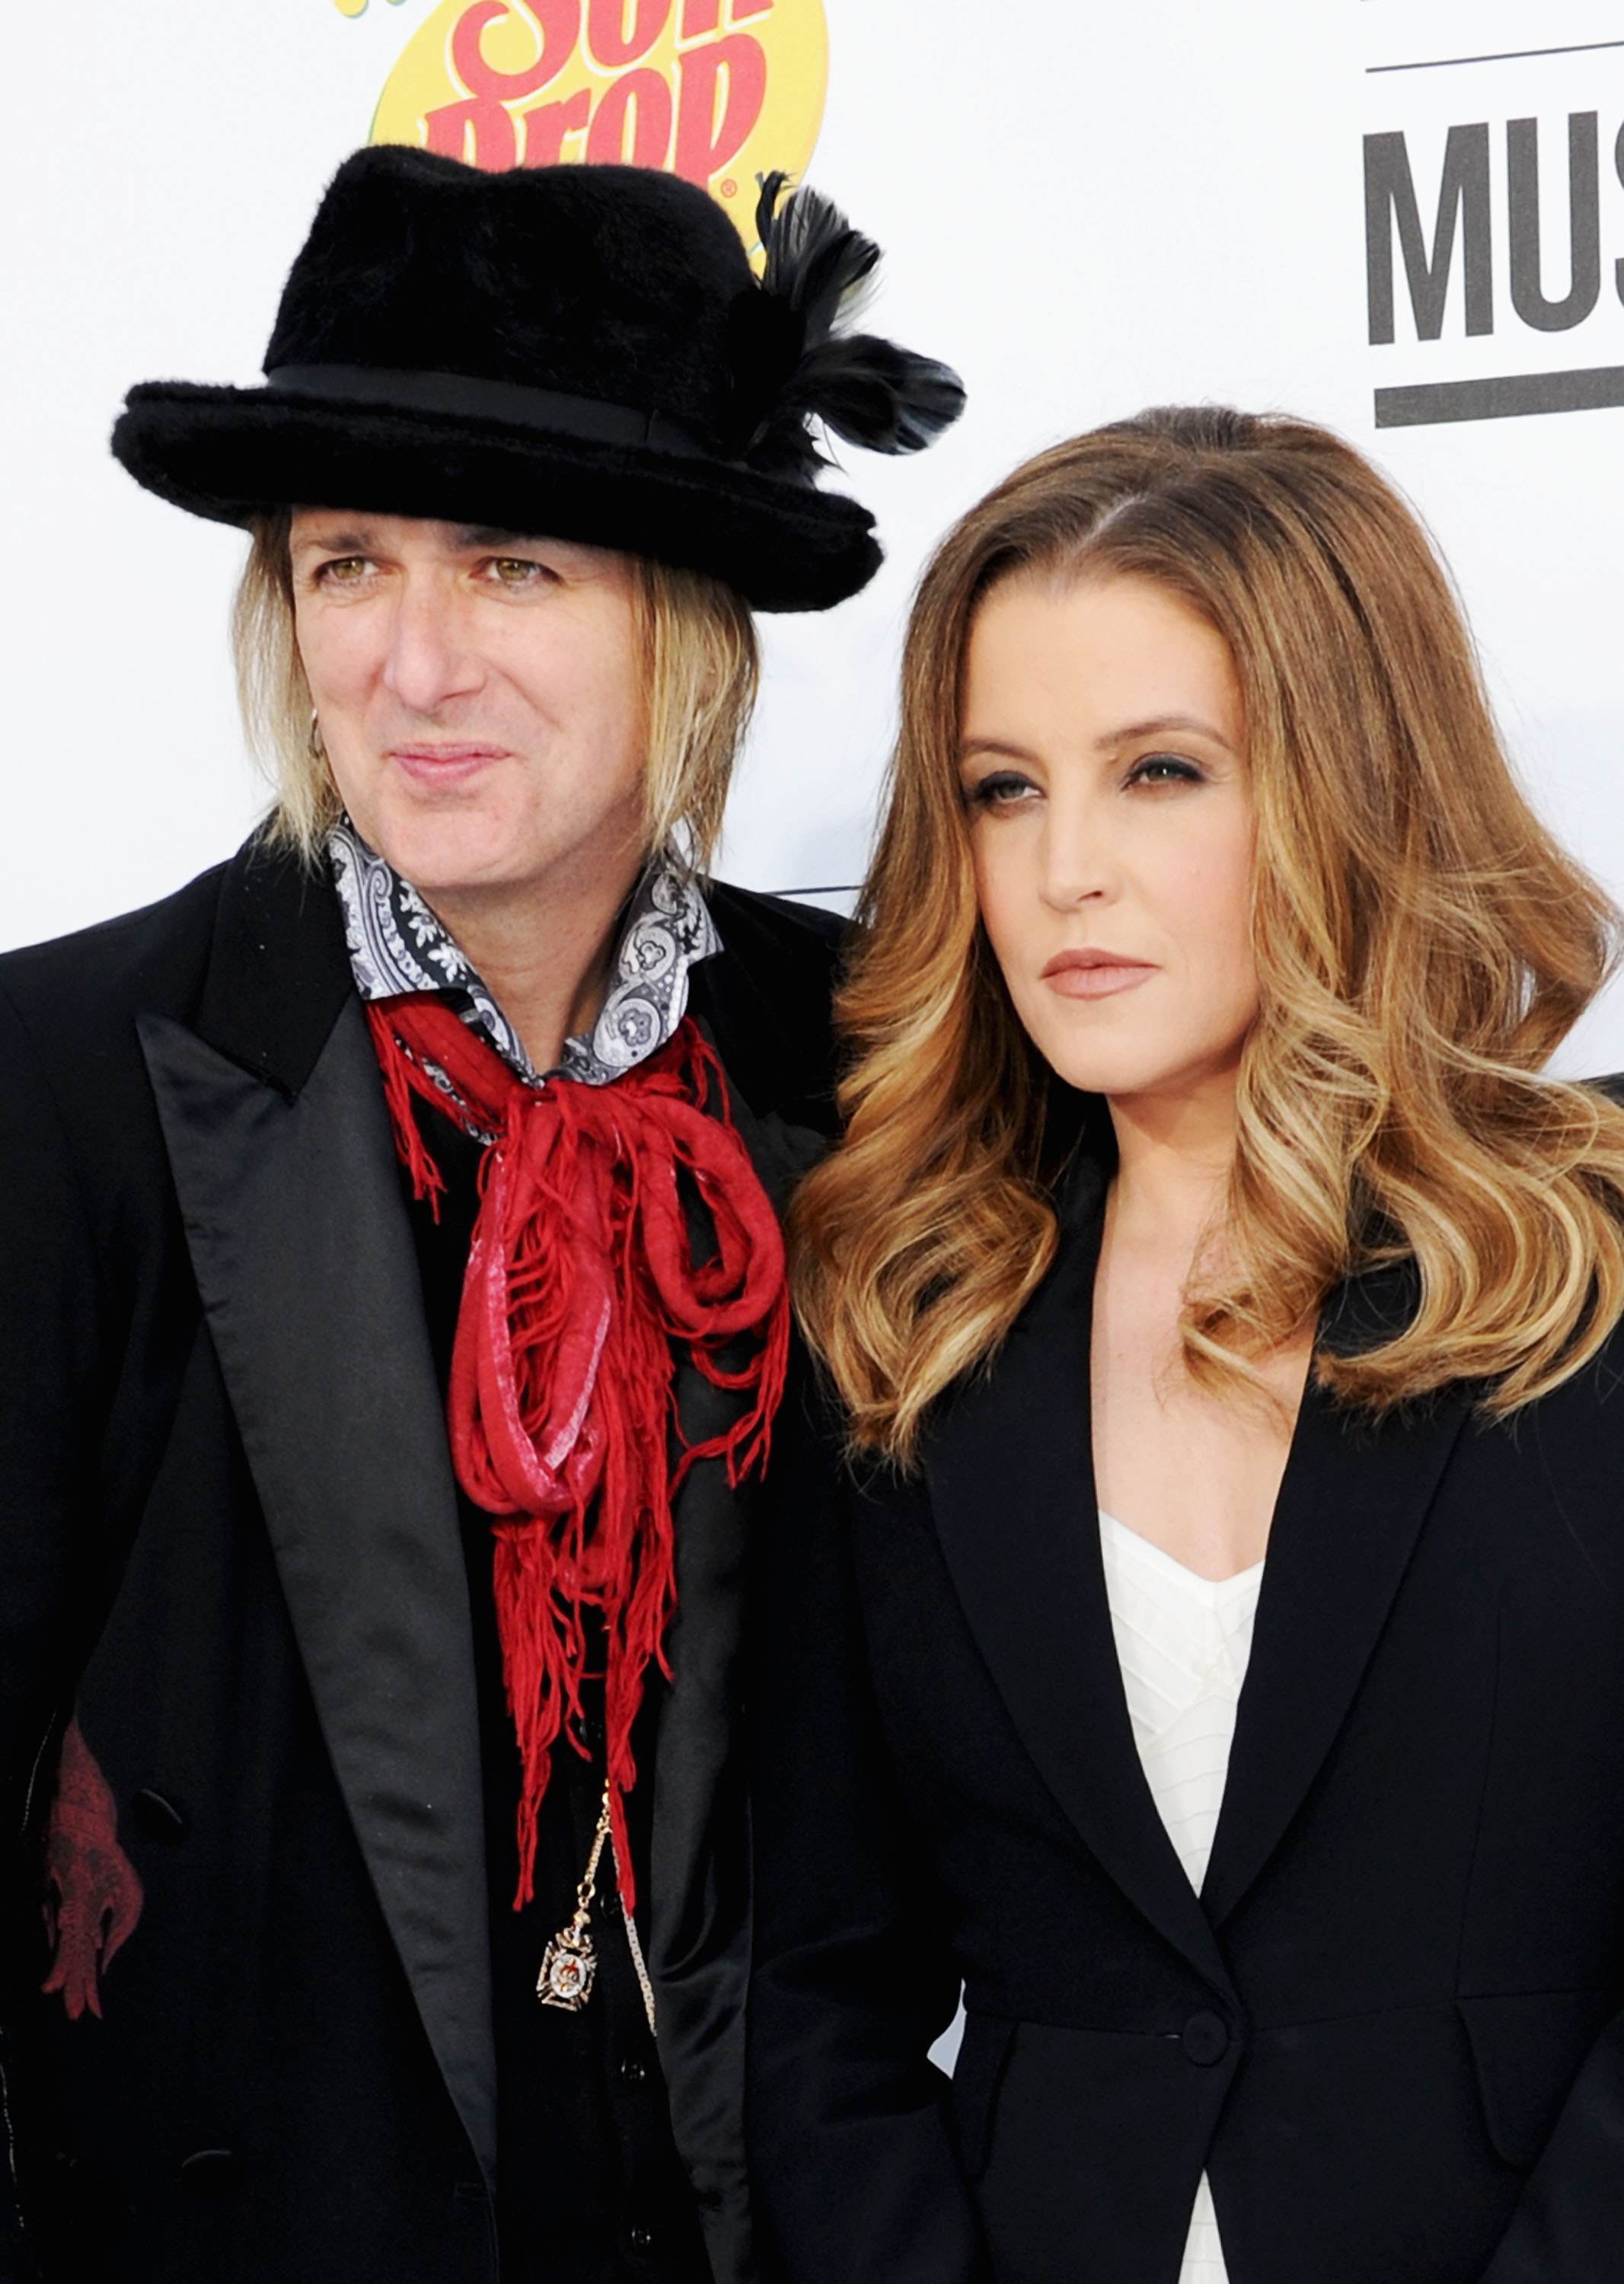 Michael Lockwood and Lisa Marie Presley on May 20, 2012 in Las Vegas, Nevada | Source: Getty Images